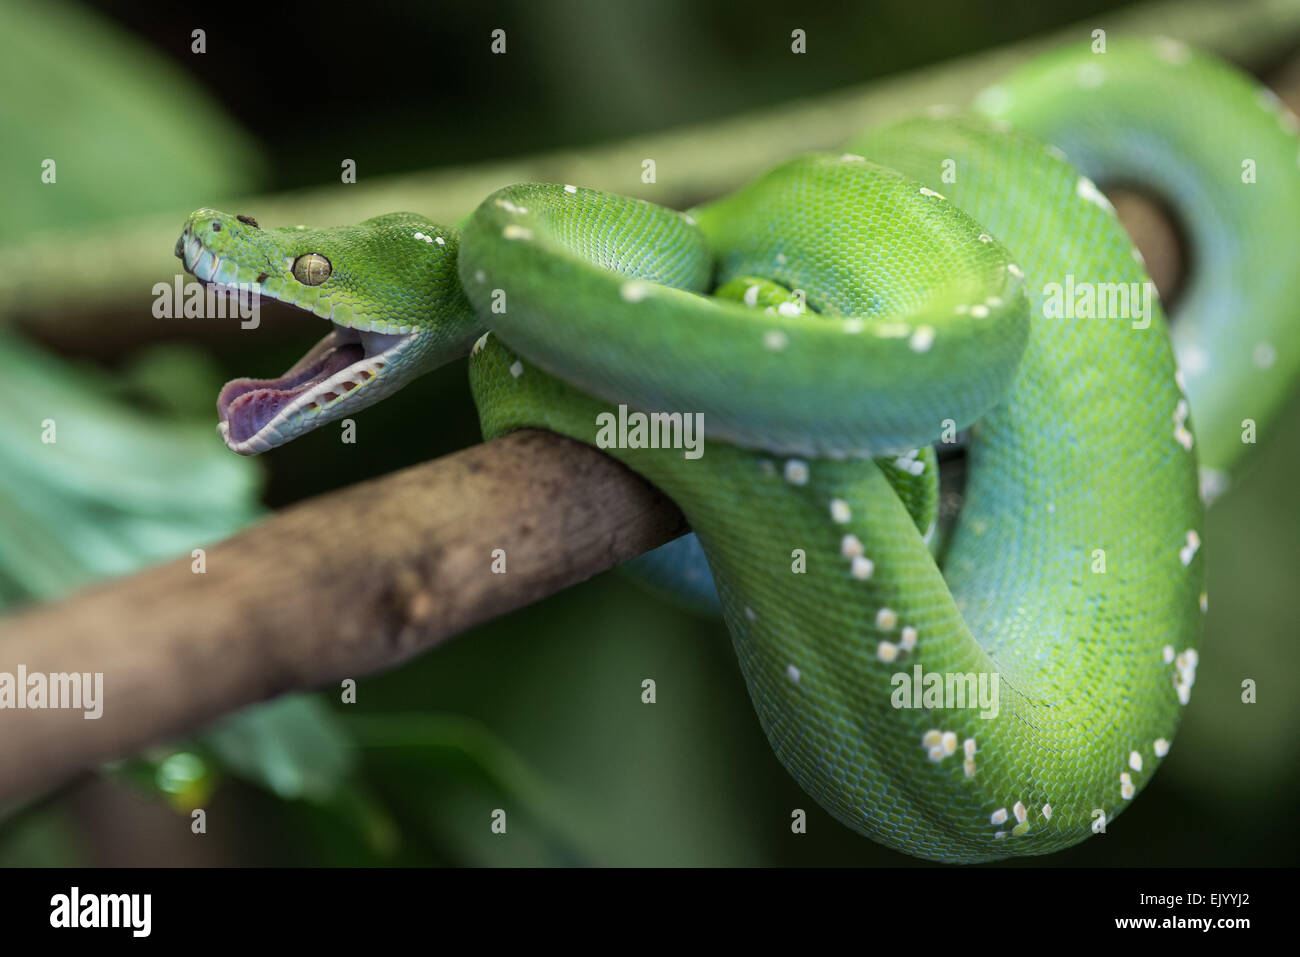 Morelia viridis,gruener Baumpython, Green Python, Green Tree Python, Stock Photo